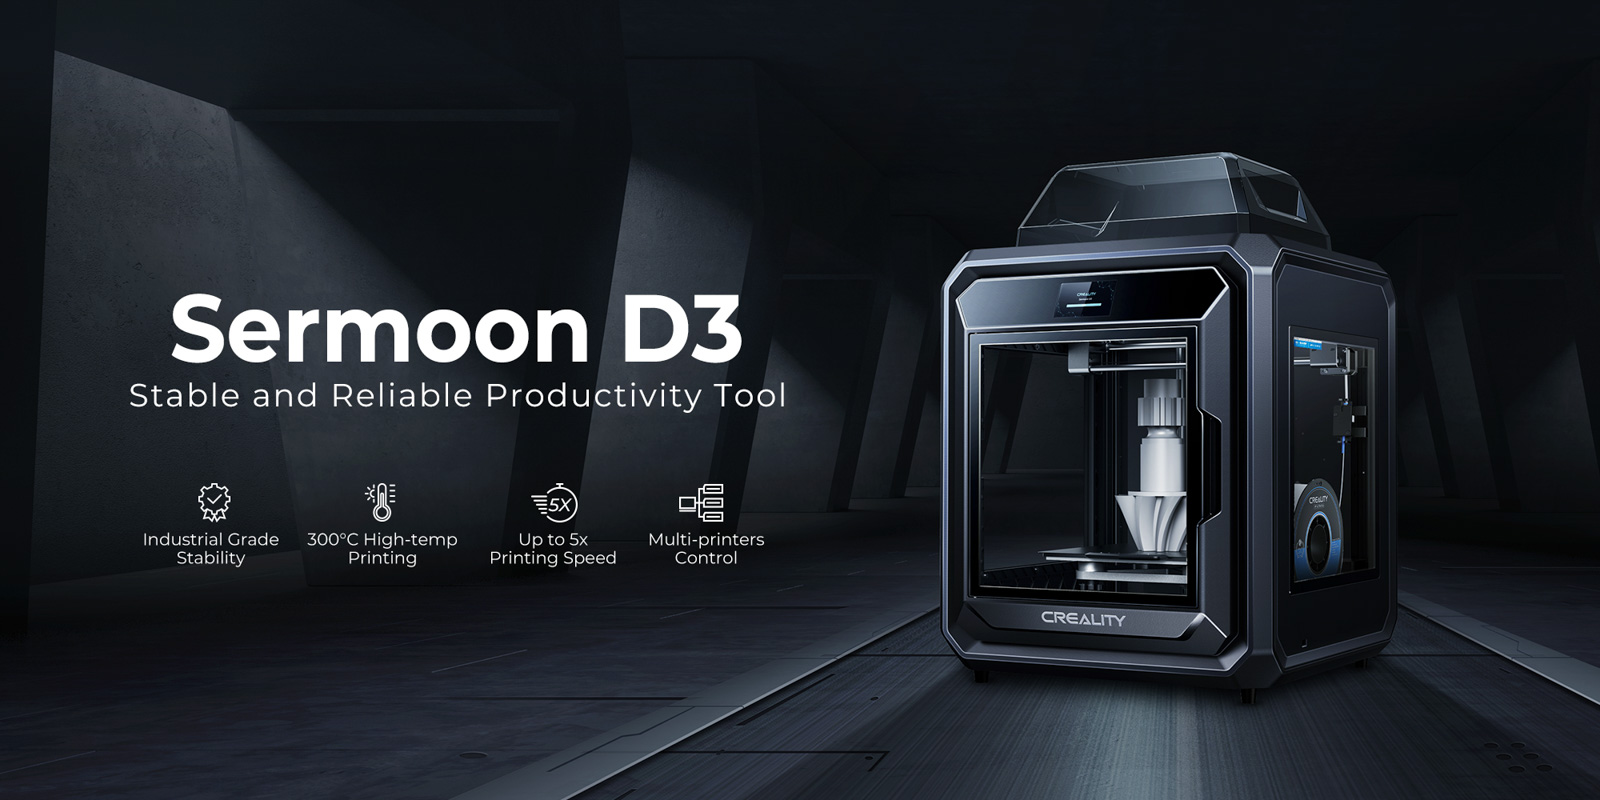 Creality announces it's Sermoon D3 3D printer